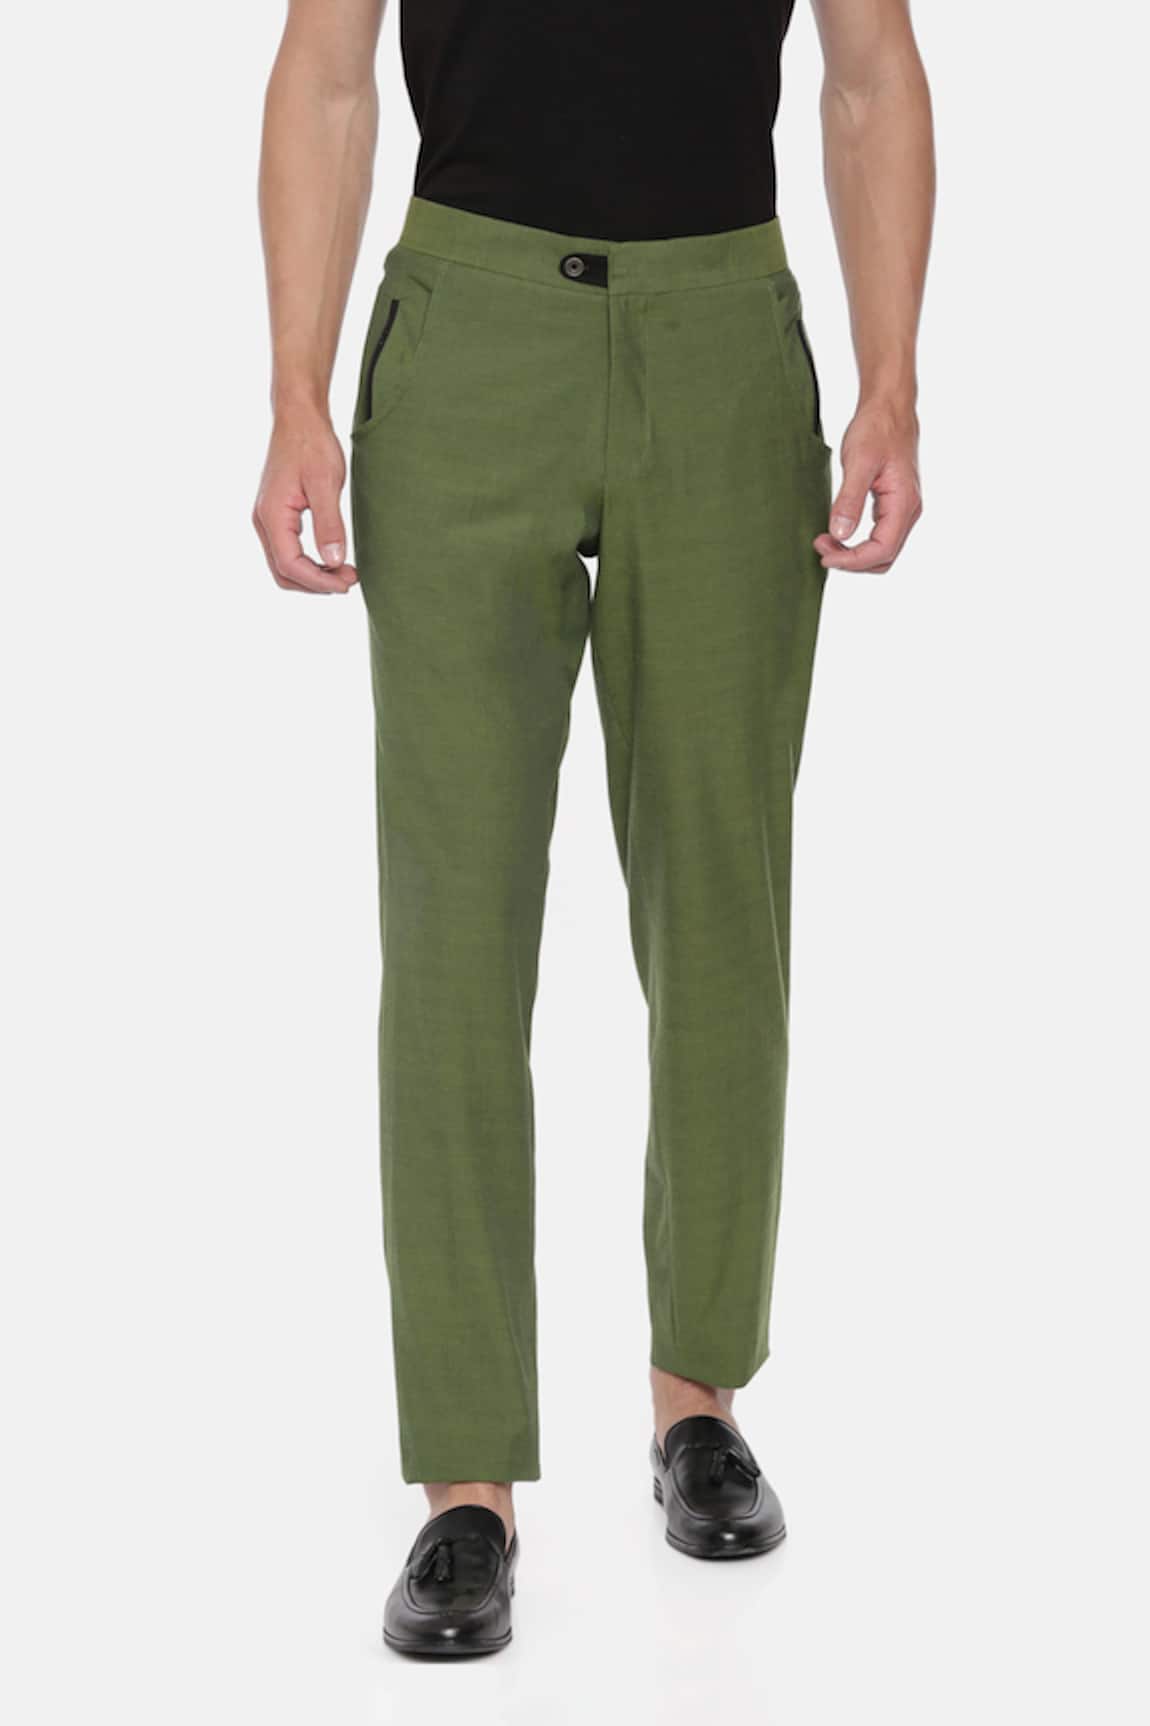 Olive Green Color Cotton Trousers For Men  Rajmohar